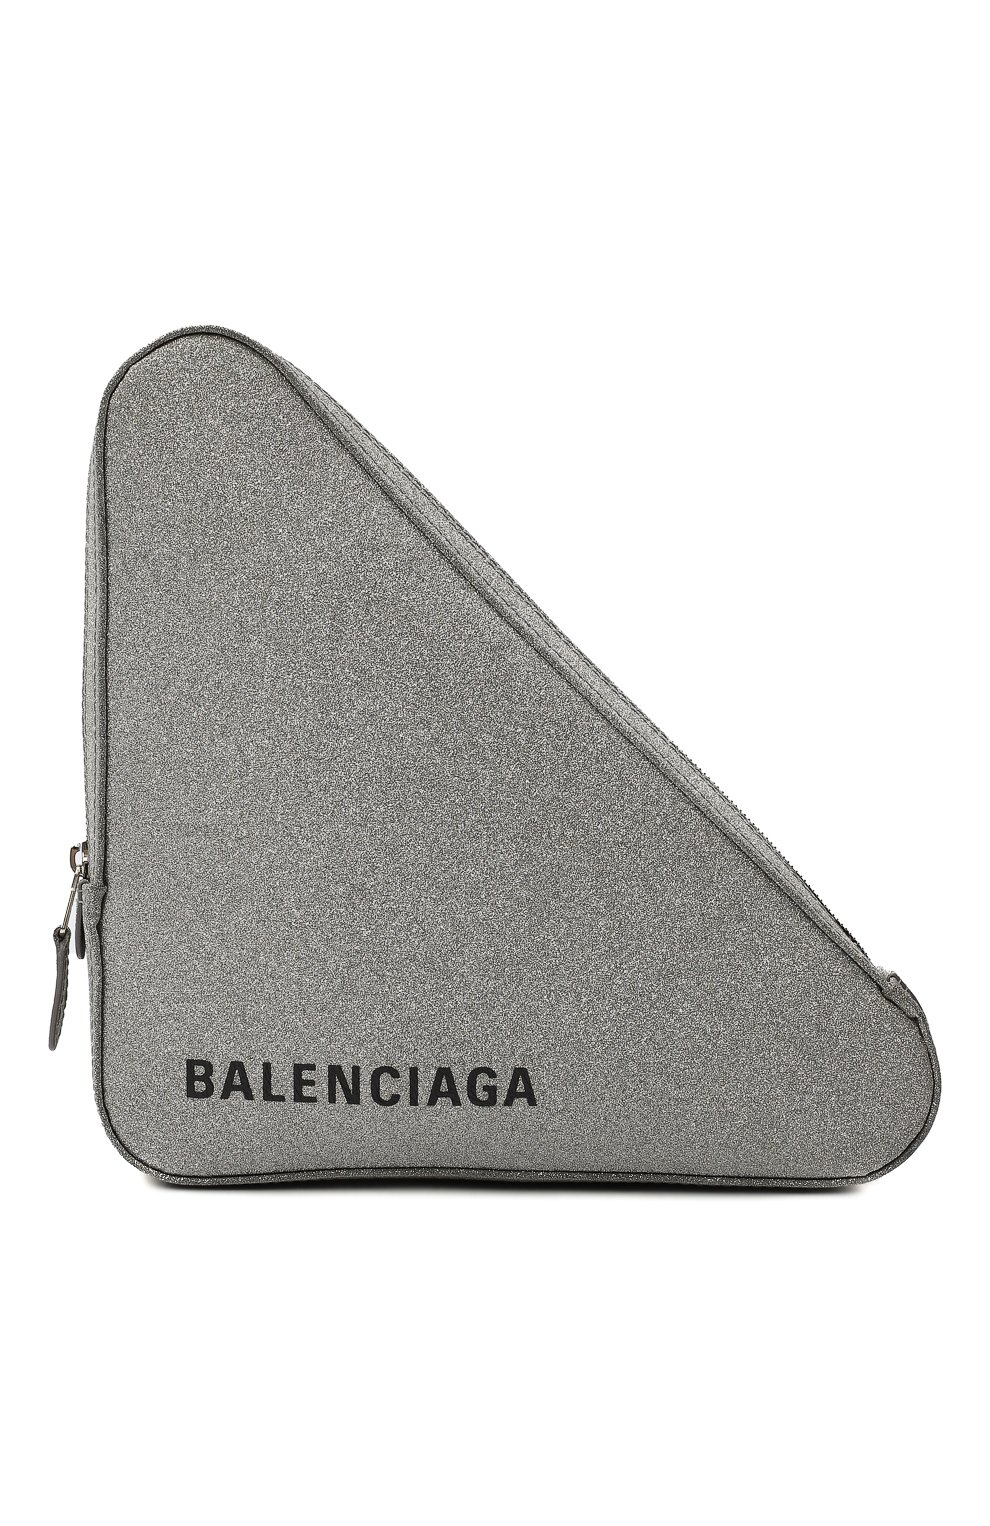 Клатч Triangle | Balenciaga | Серебряный - 1